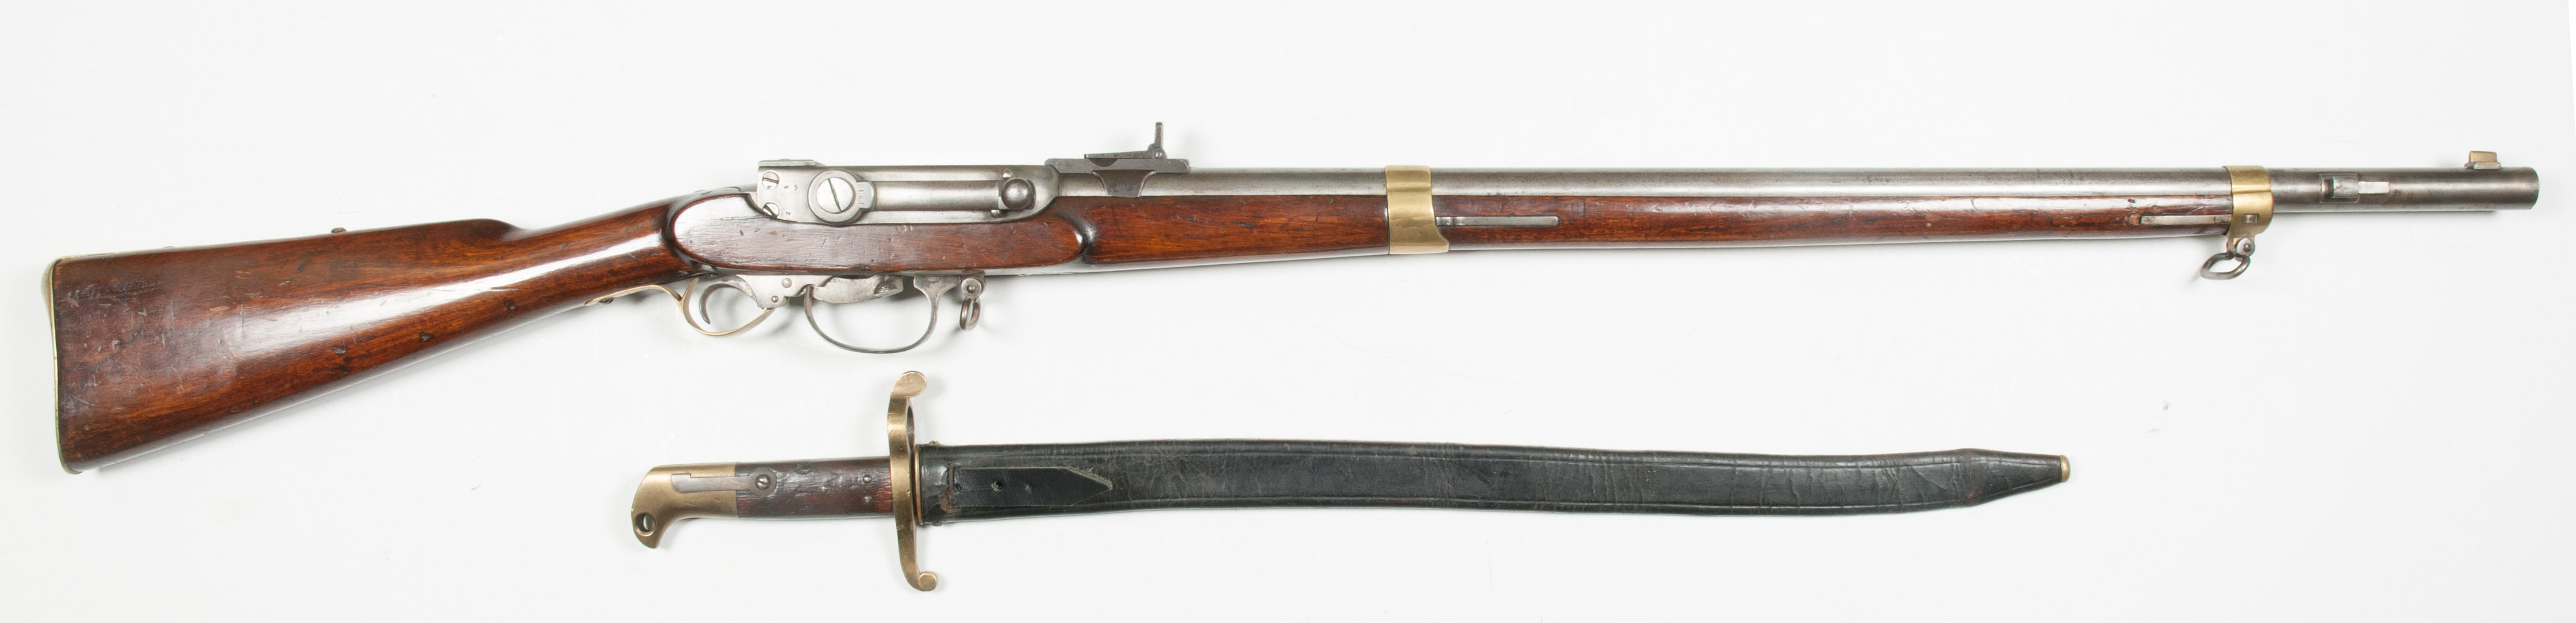 ./guns/rifle/bilder/Rifle-Kongsberg-Kammerlader-M1842-55-59-161-1.jpg